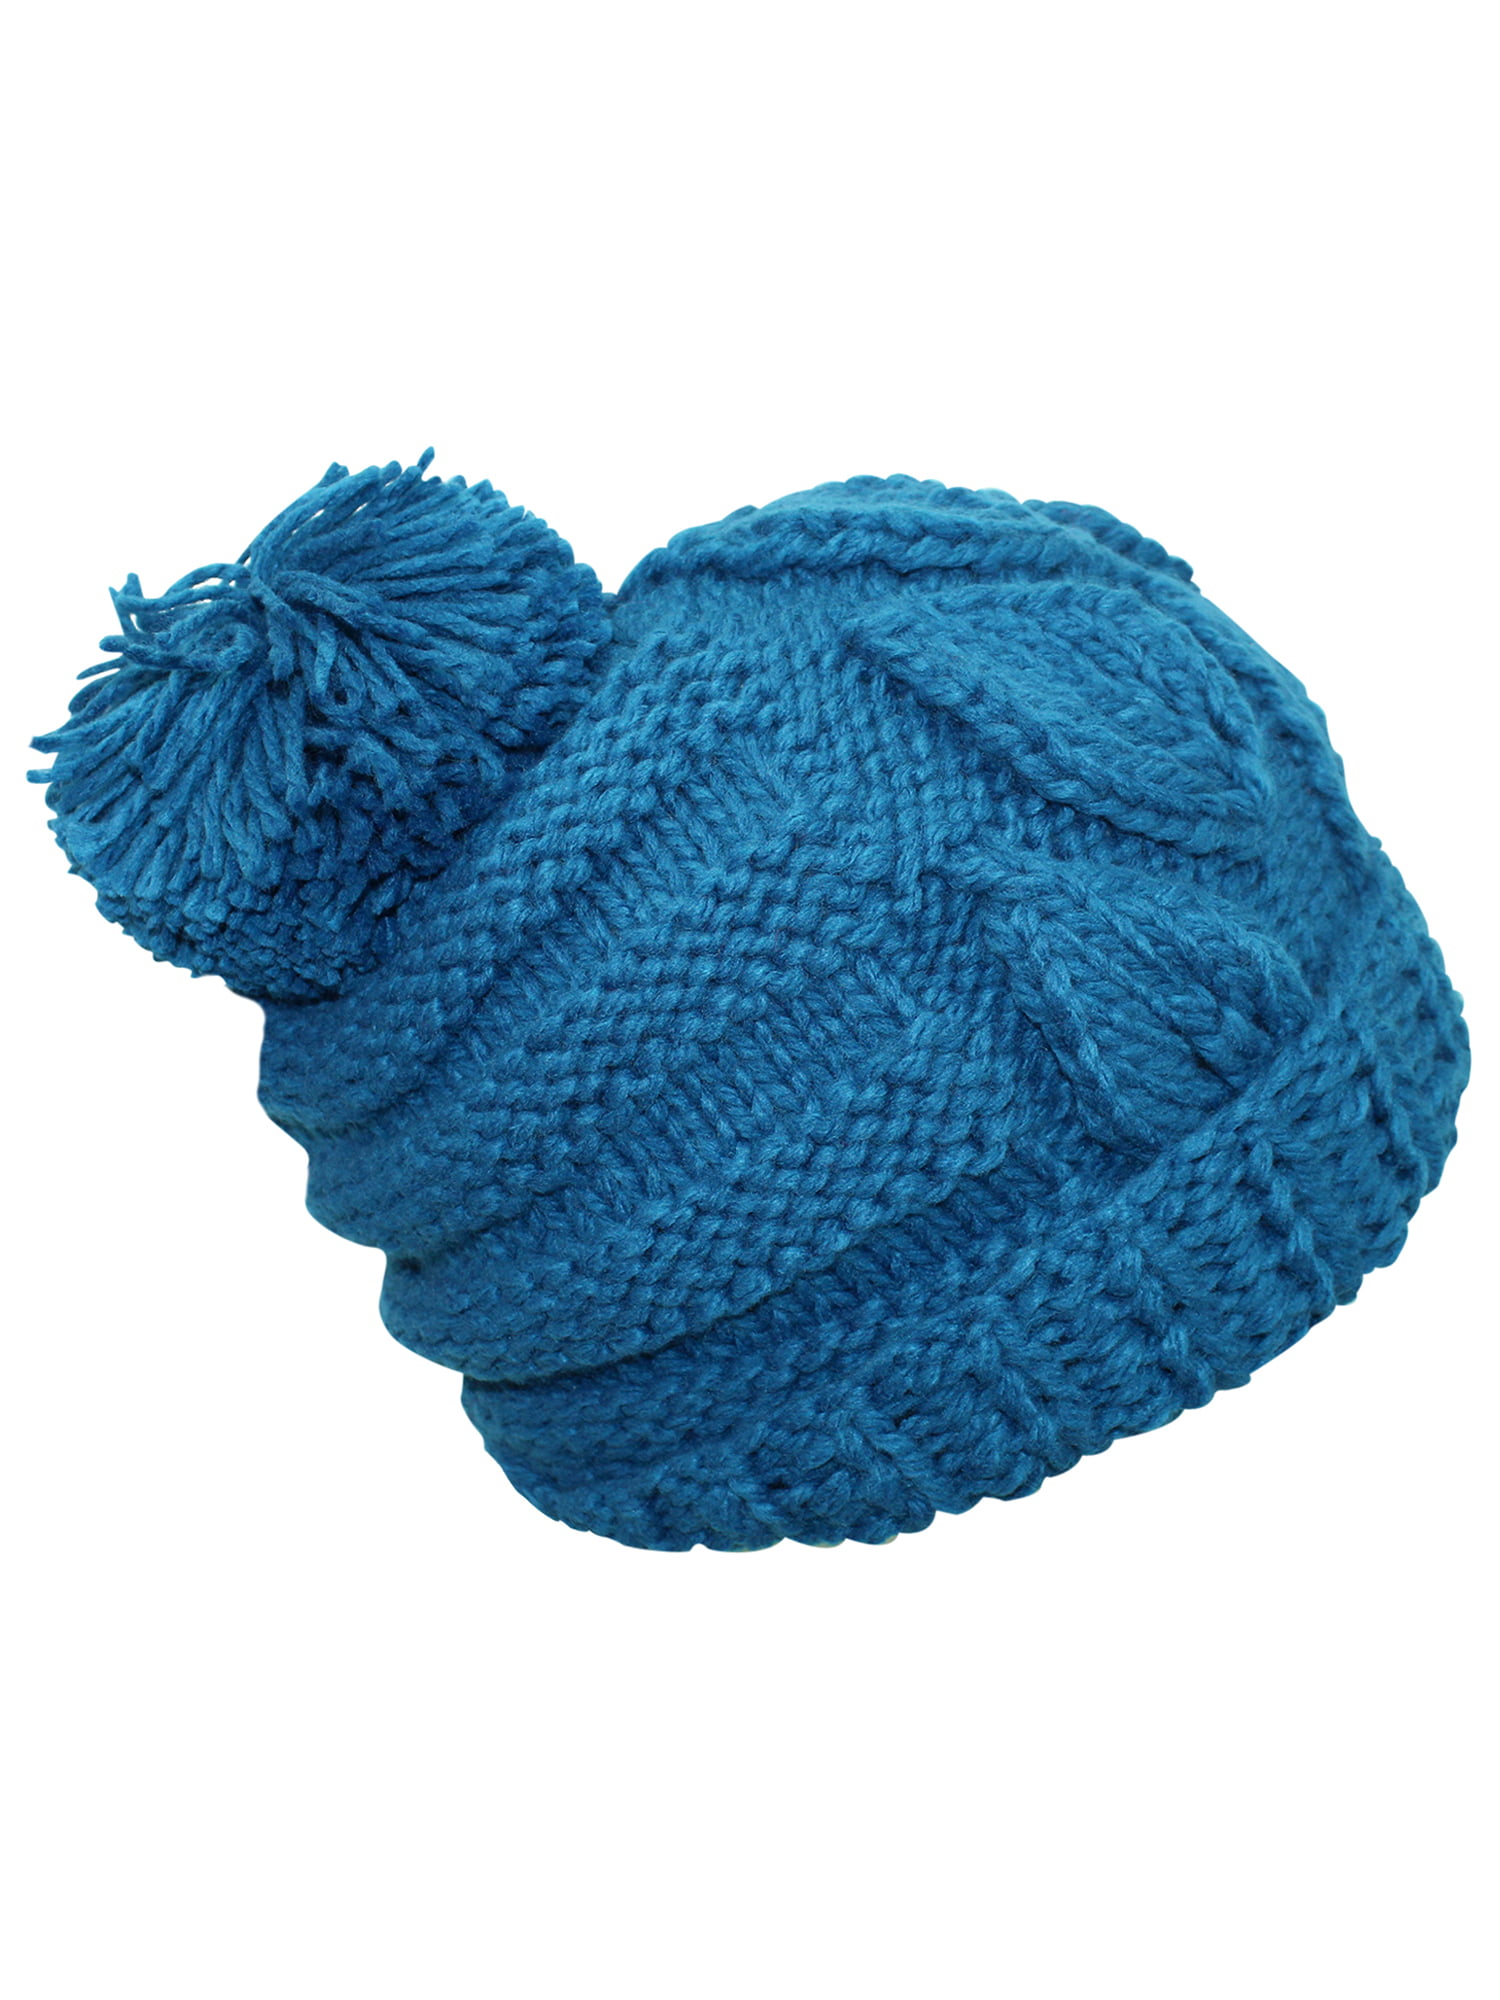 Grey Slouchy Winter Cable Knit Beanie Hat With Pom Pom